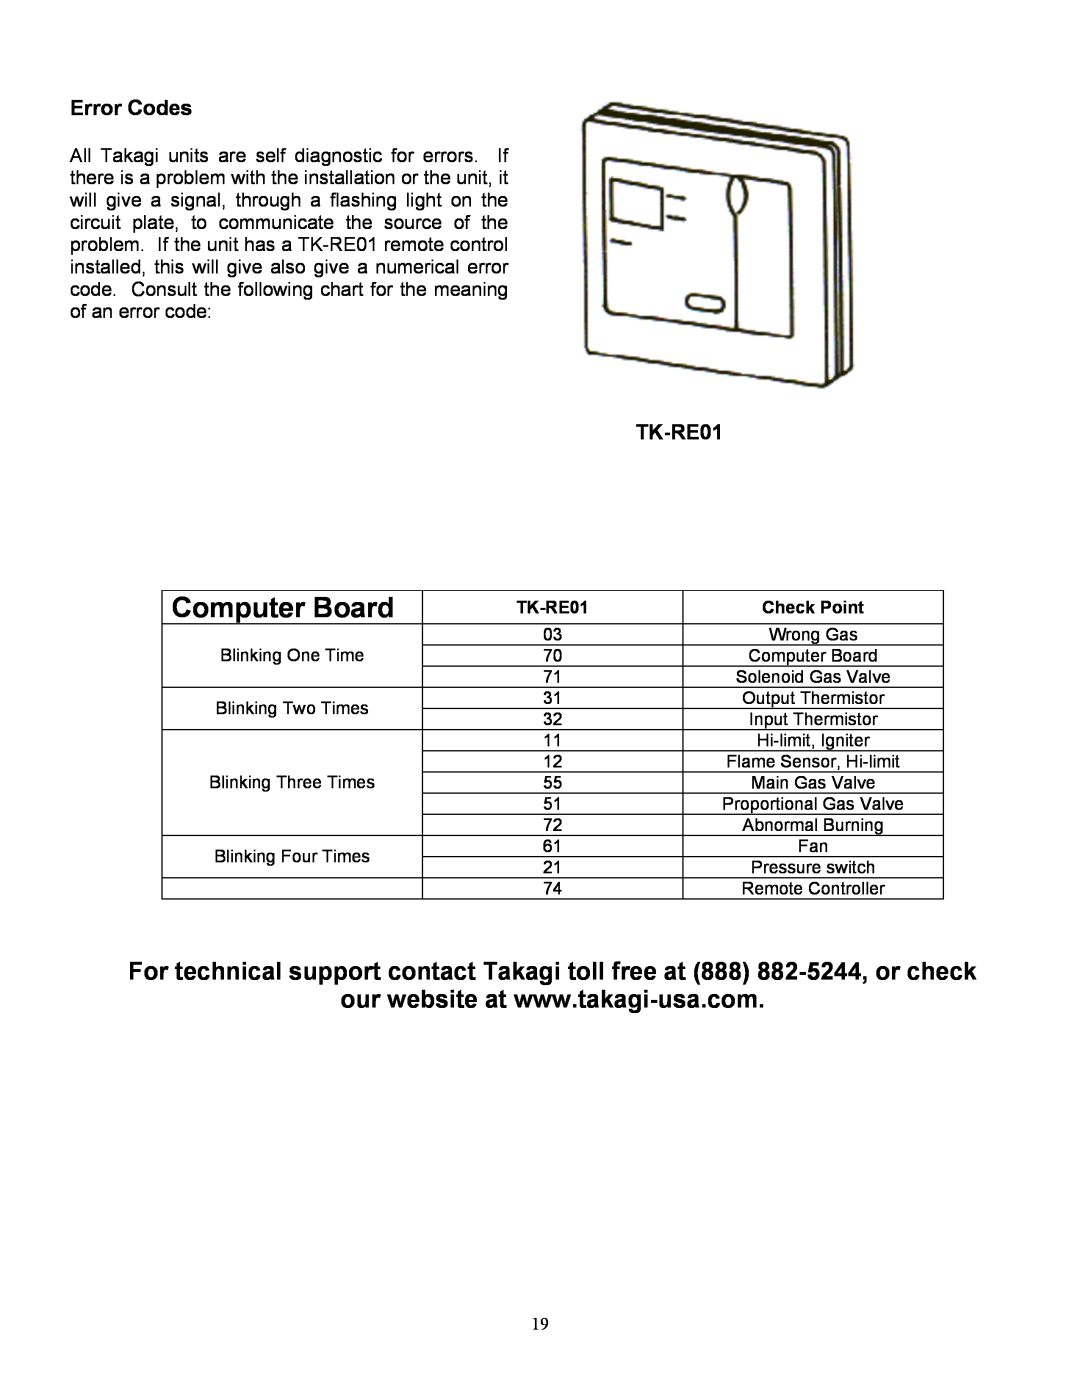 Whirlpool T-K1S installation manual Computer Board, Error Codes, TK-RE01 